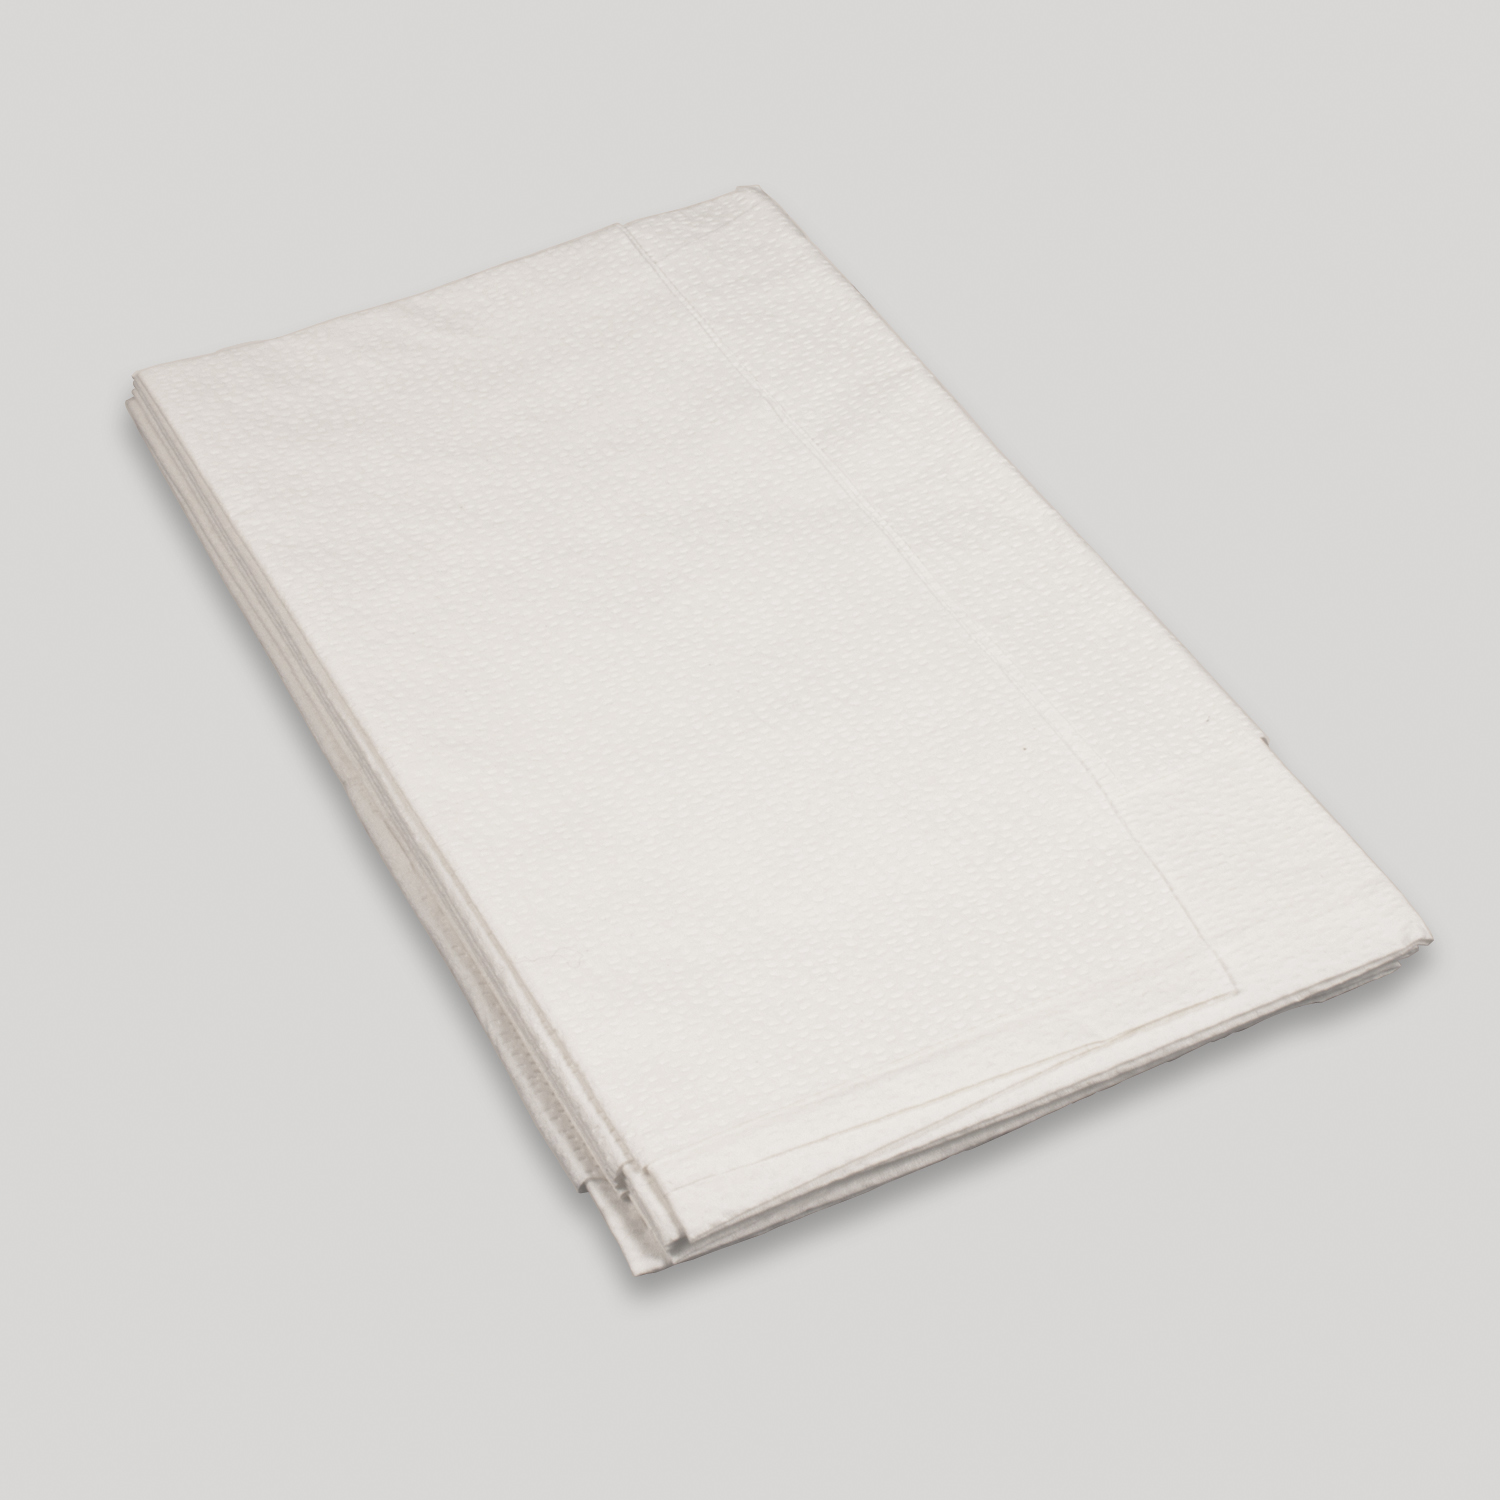 Drape Sheets (White) 2ply Tissue 40 x 72